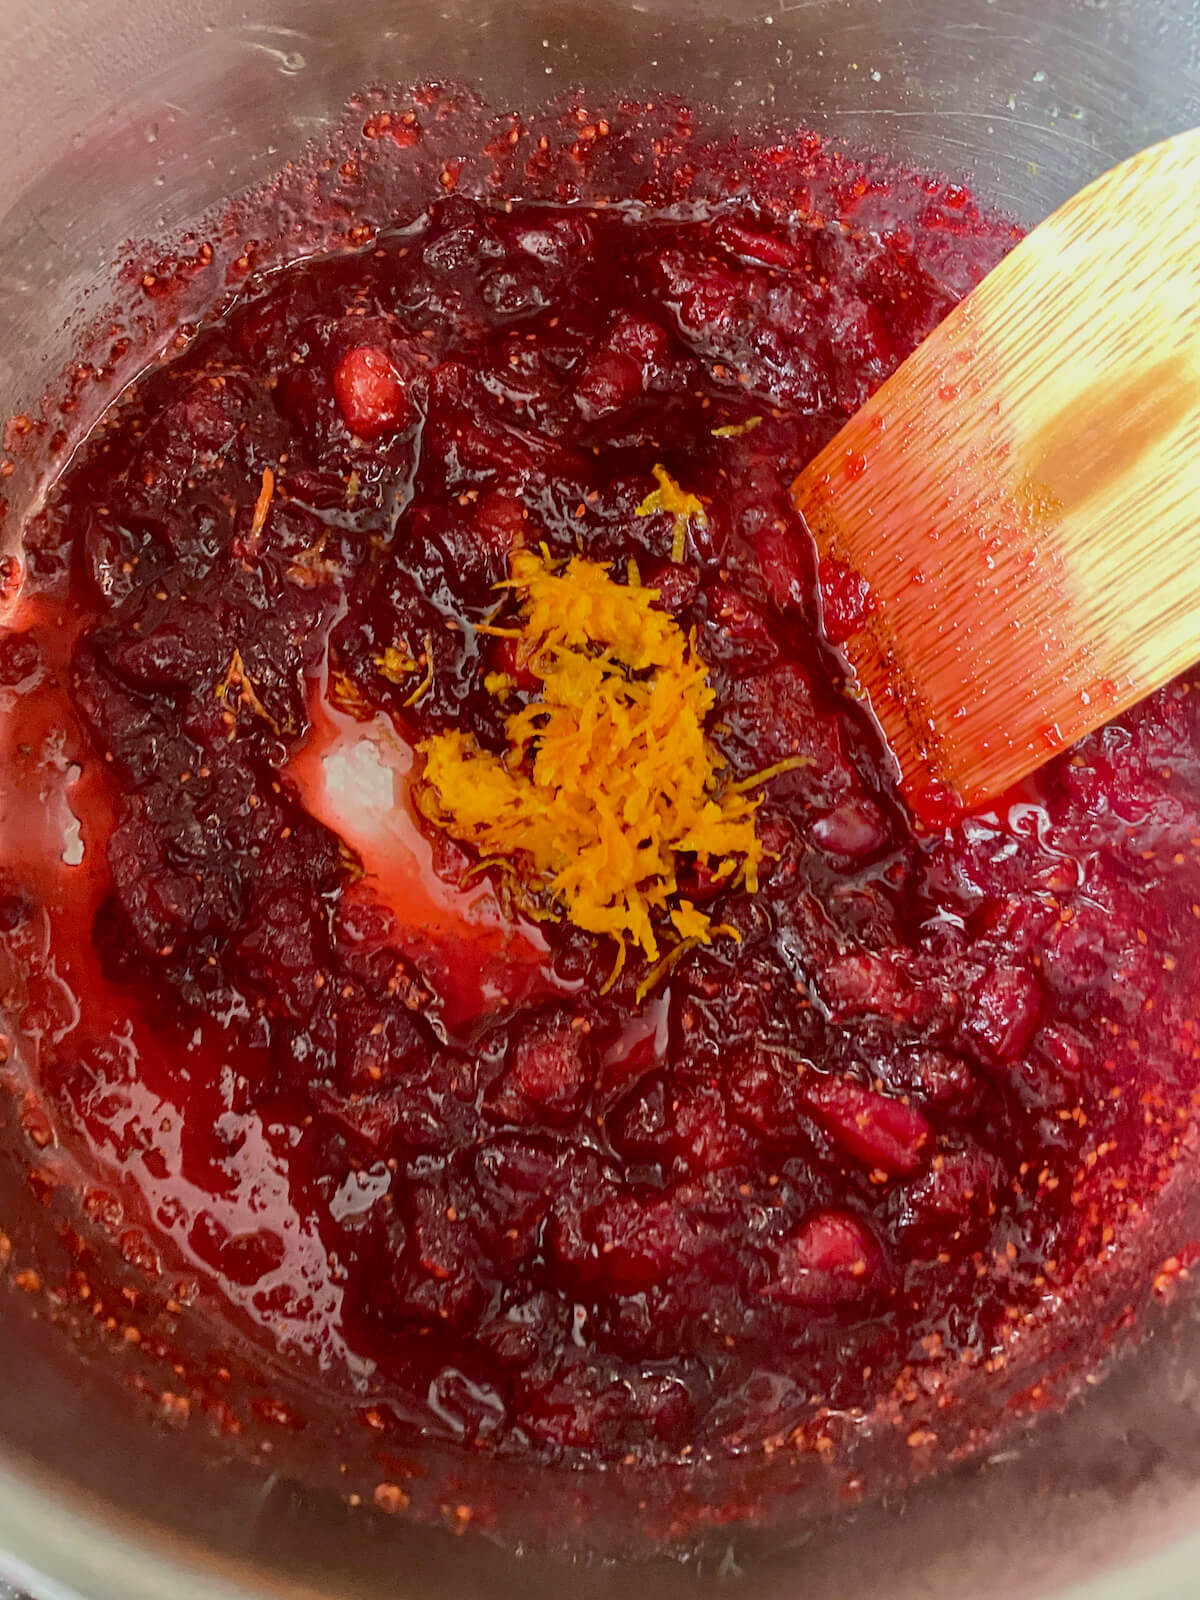 Orange zest being stirred into fresh cranberry sauce with orange juice.